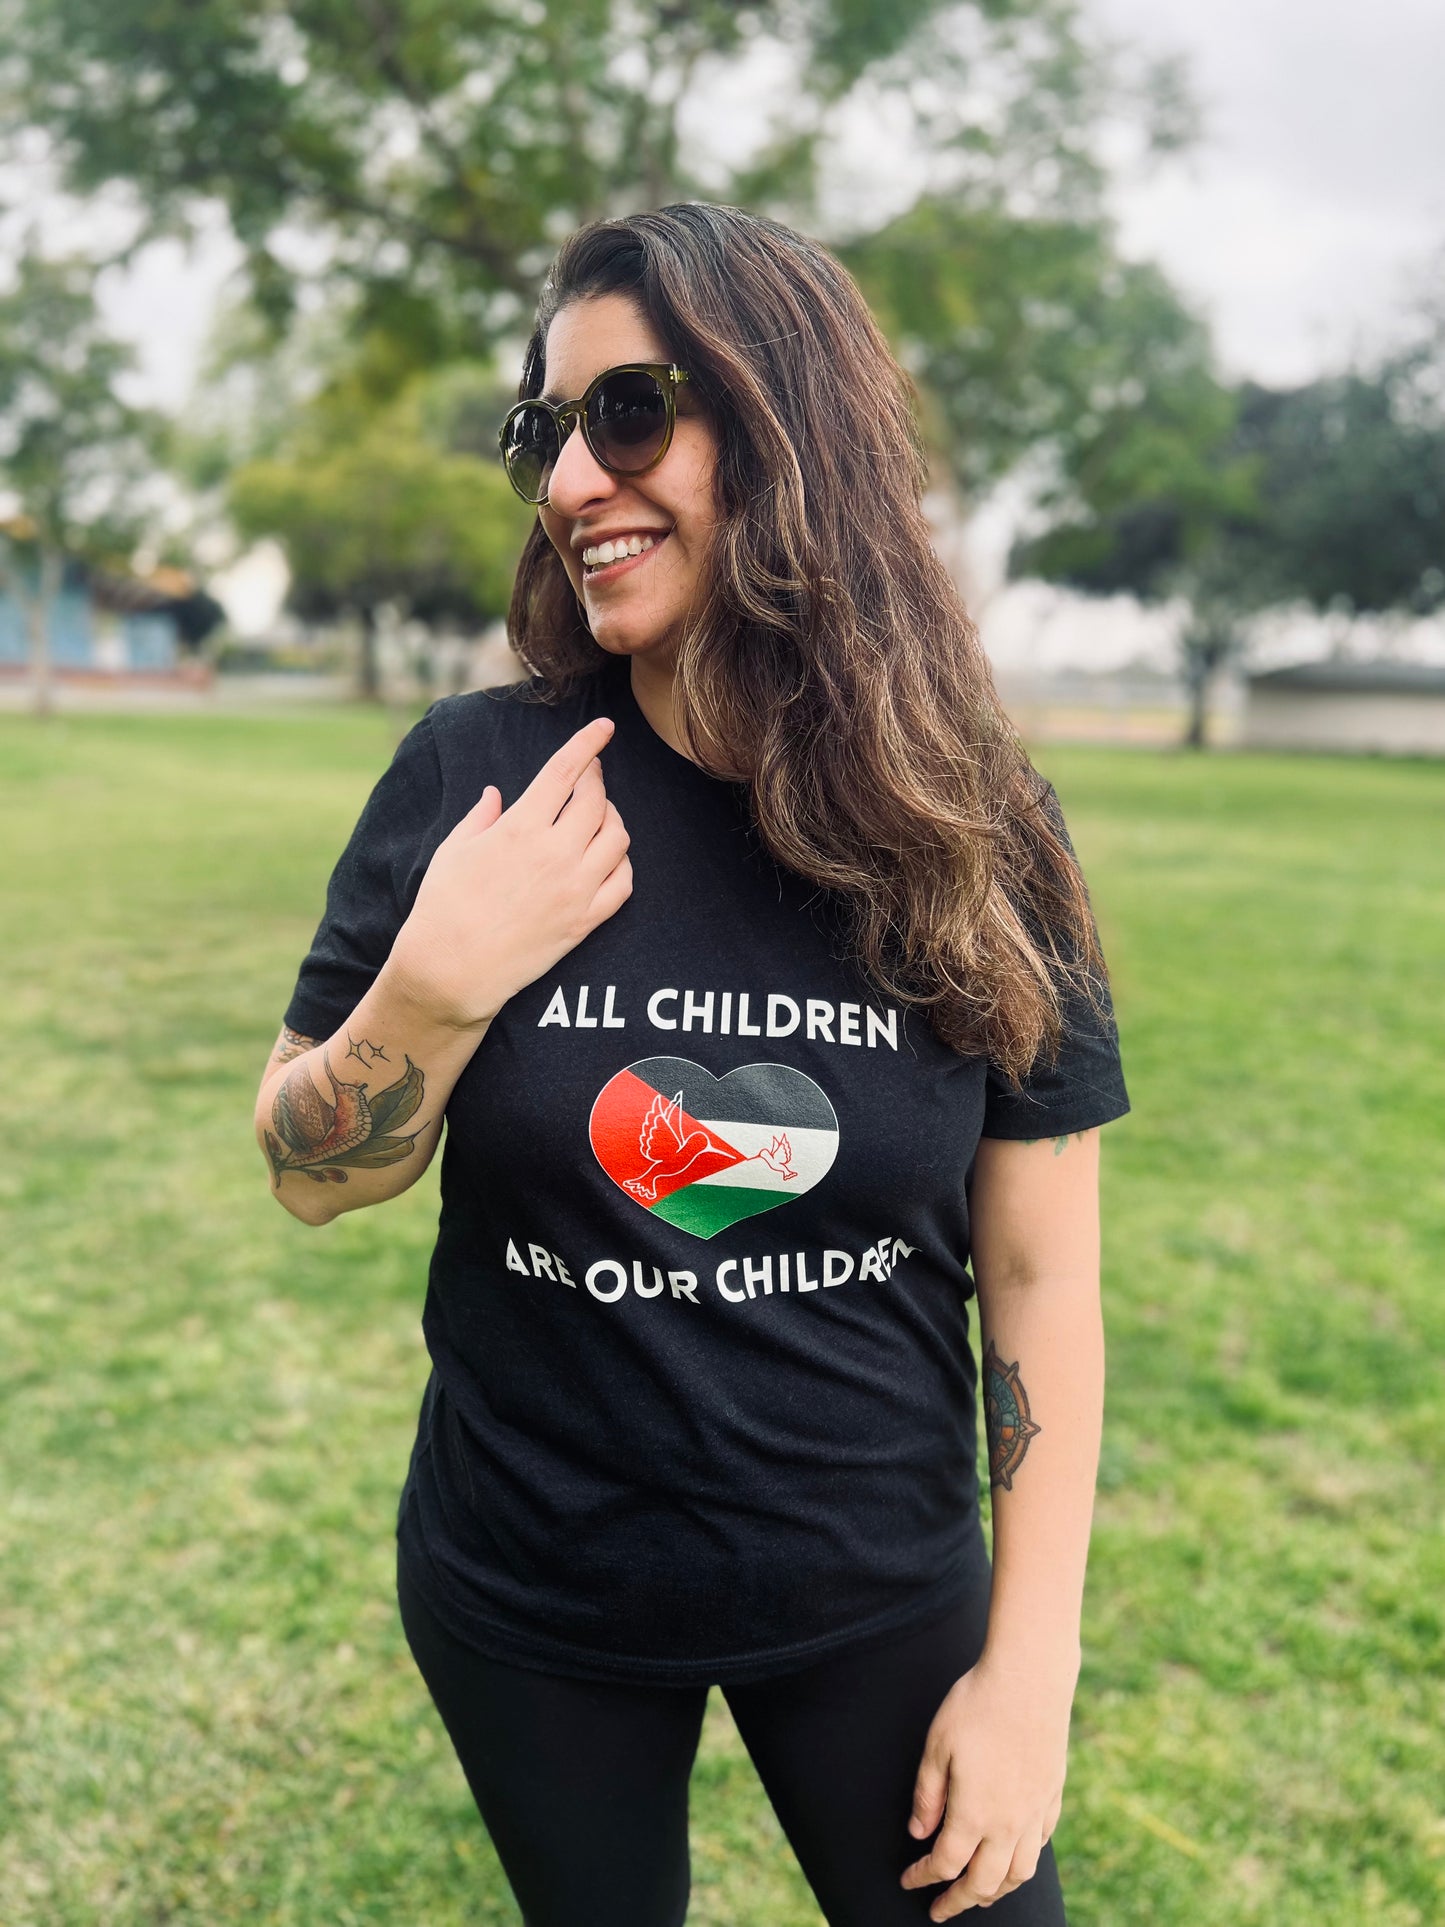 All children are our children ❤️